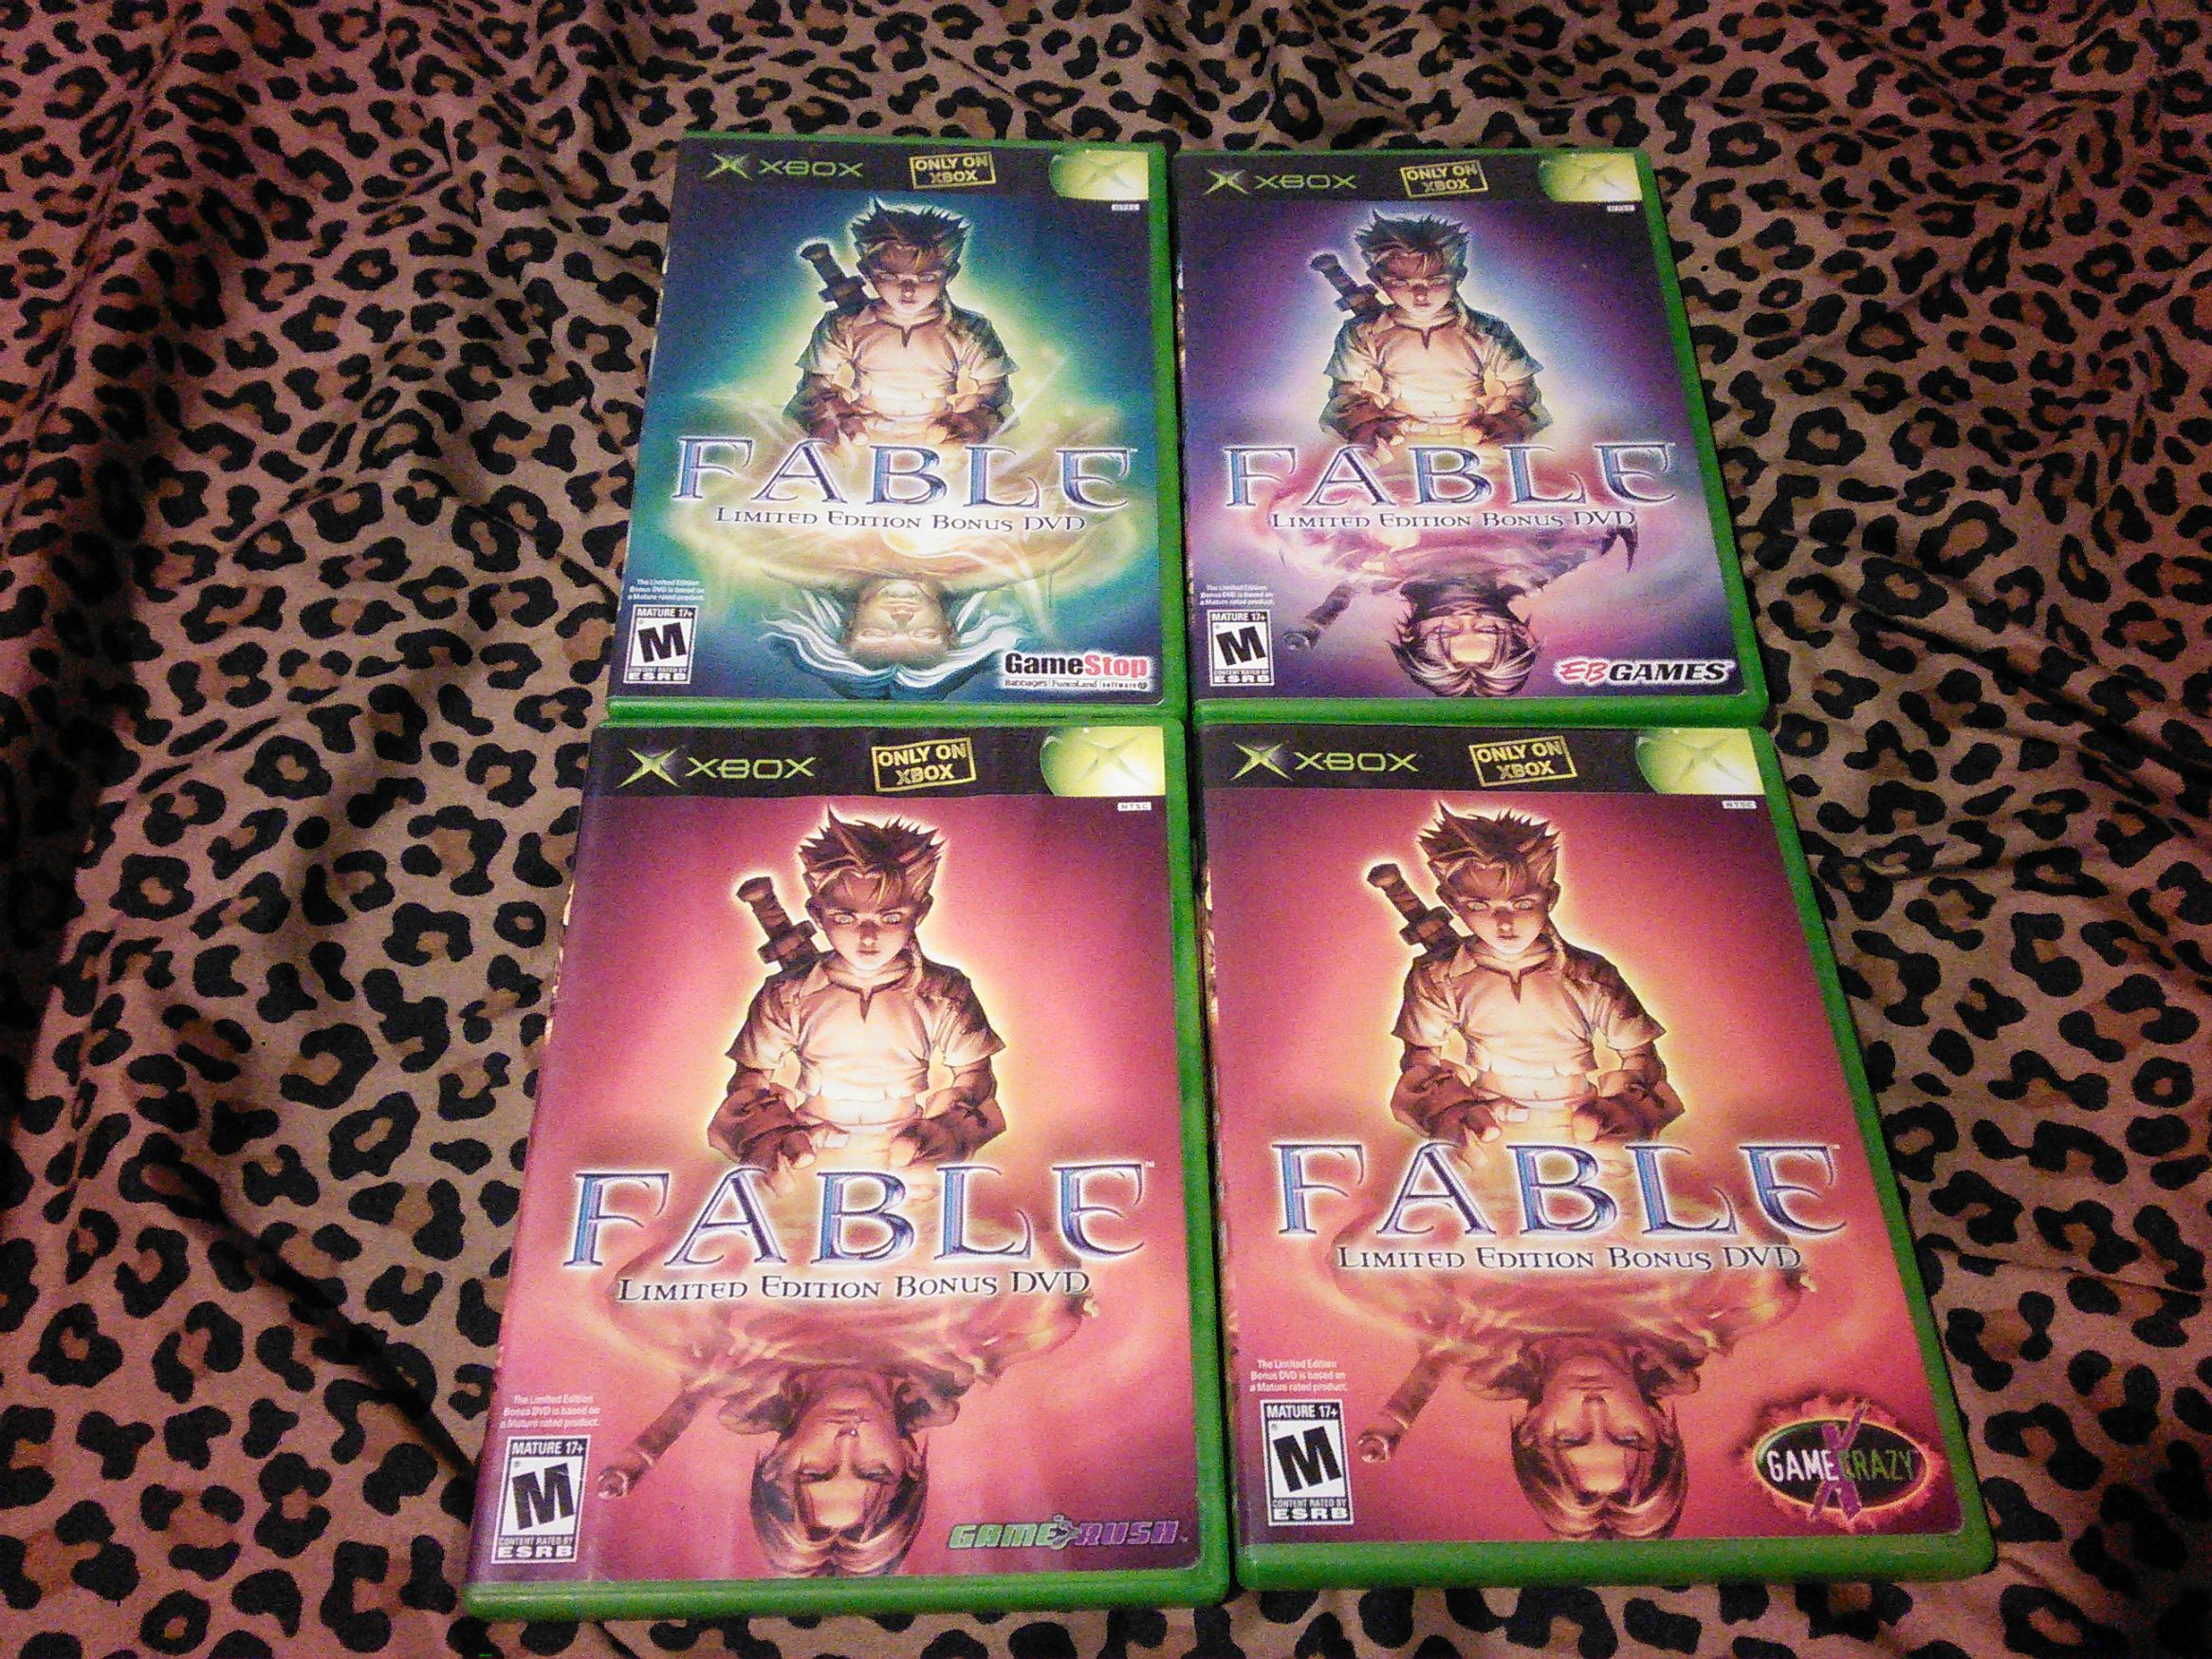 Fable (Black Label) - Complete Original Xbox Game Complete w